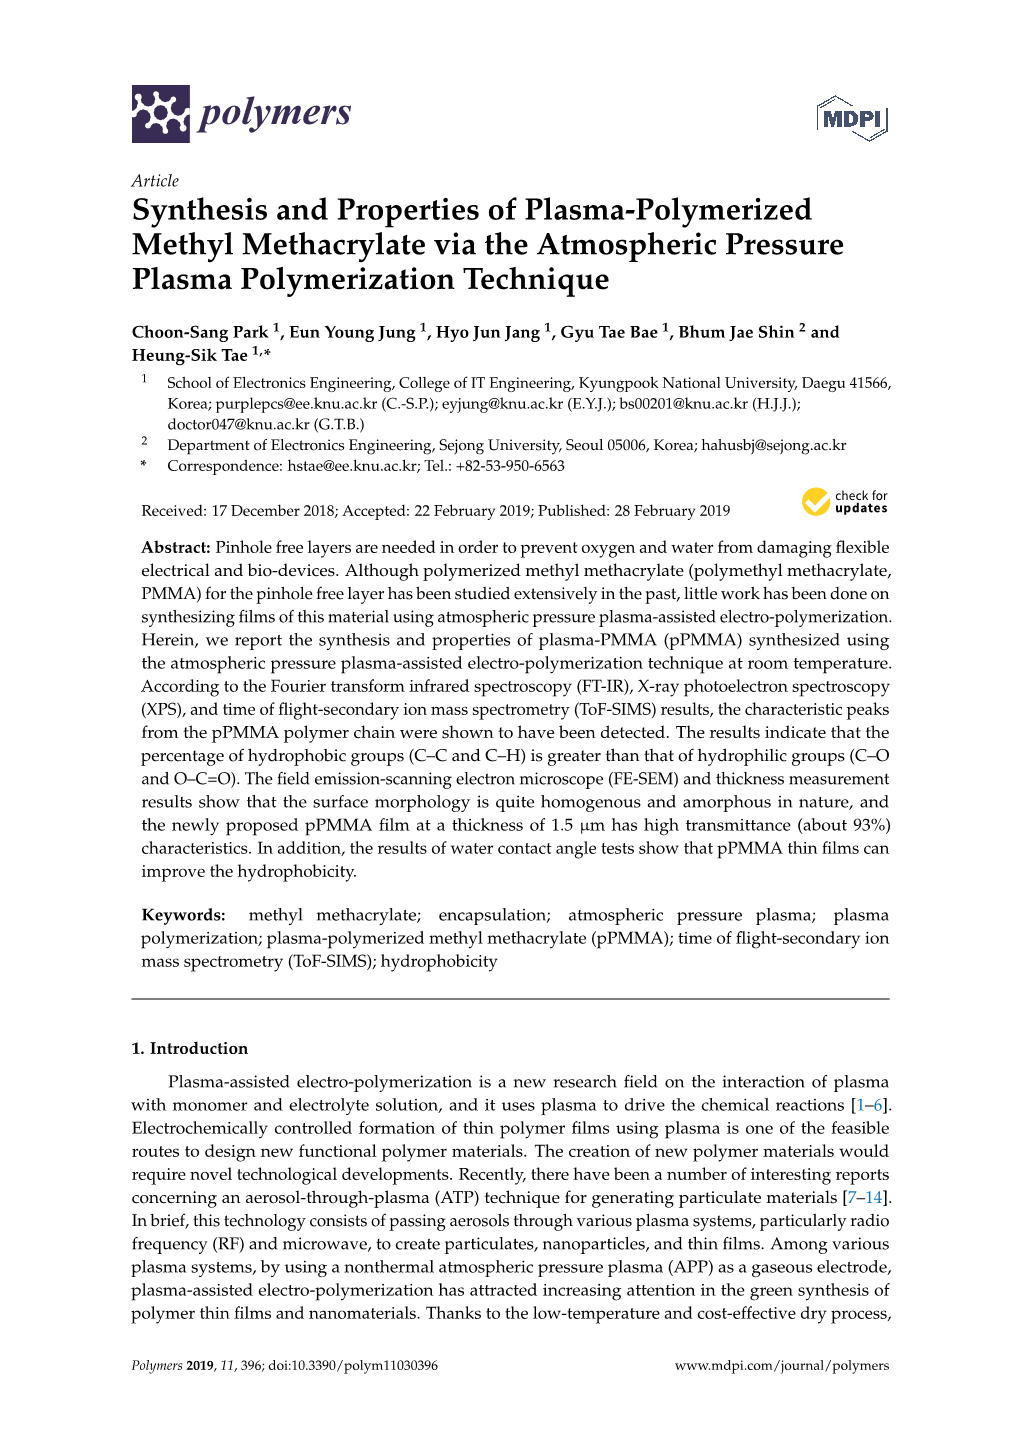 Synthesis and Properties of Plasma-Polymerized Methyl Methacrylate Via the Atmospheric Pressure Plasma Polymerization Technique